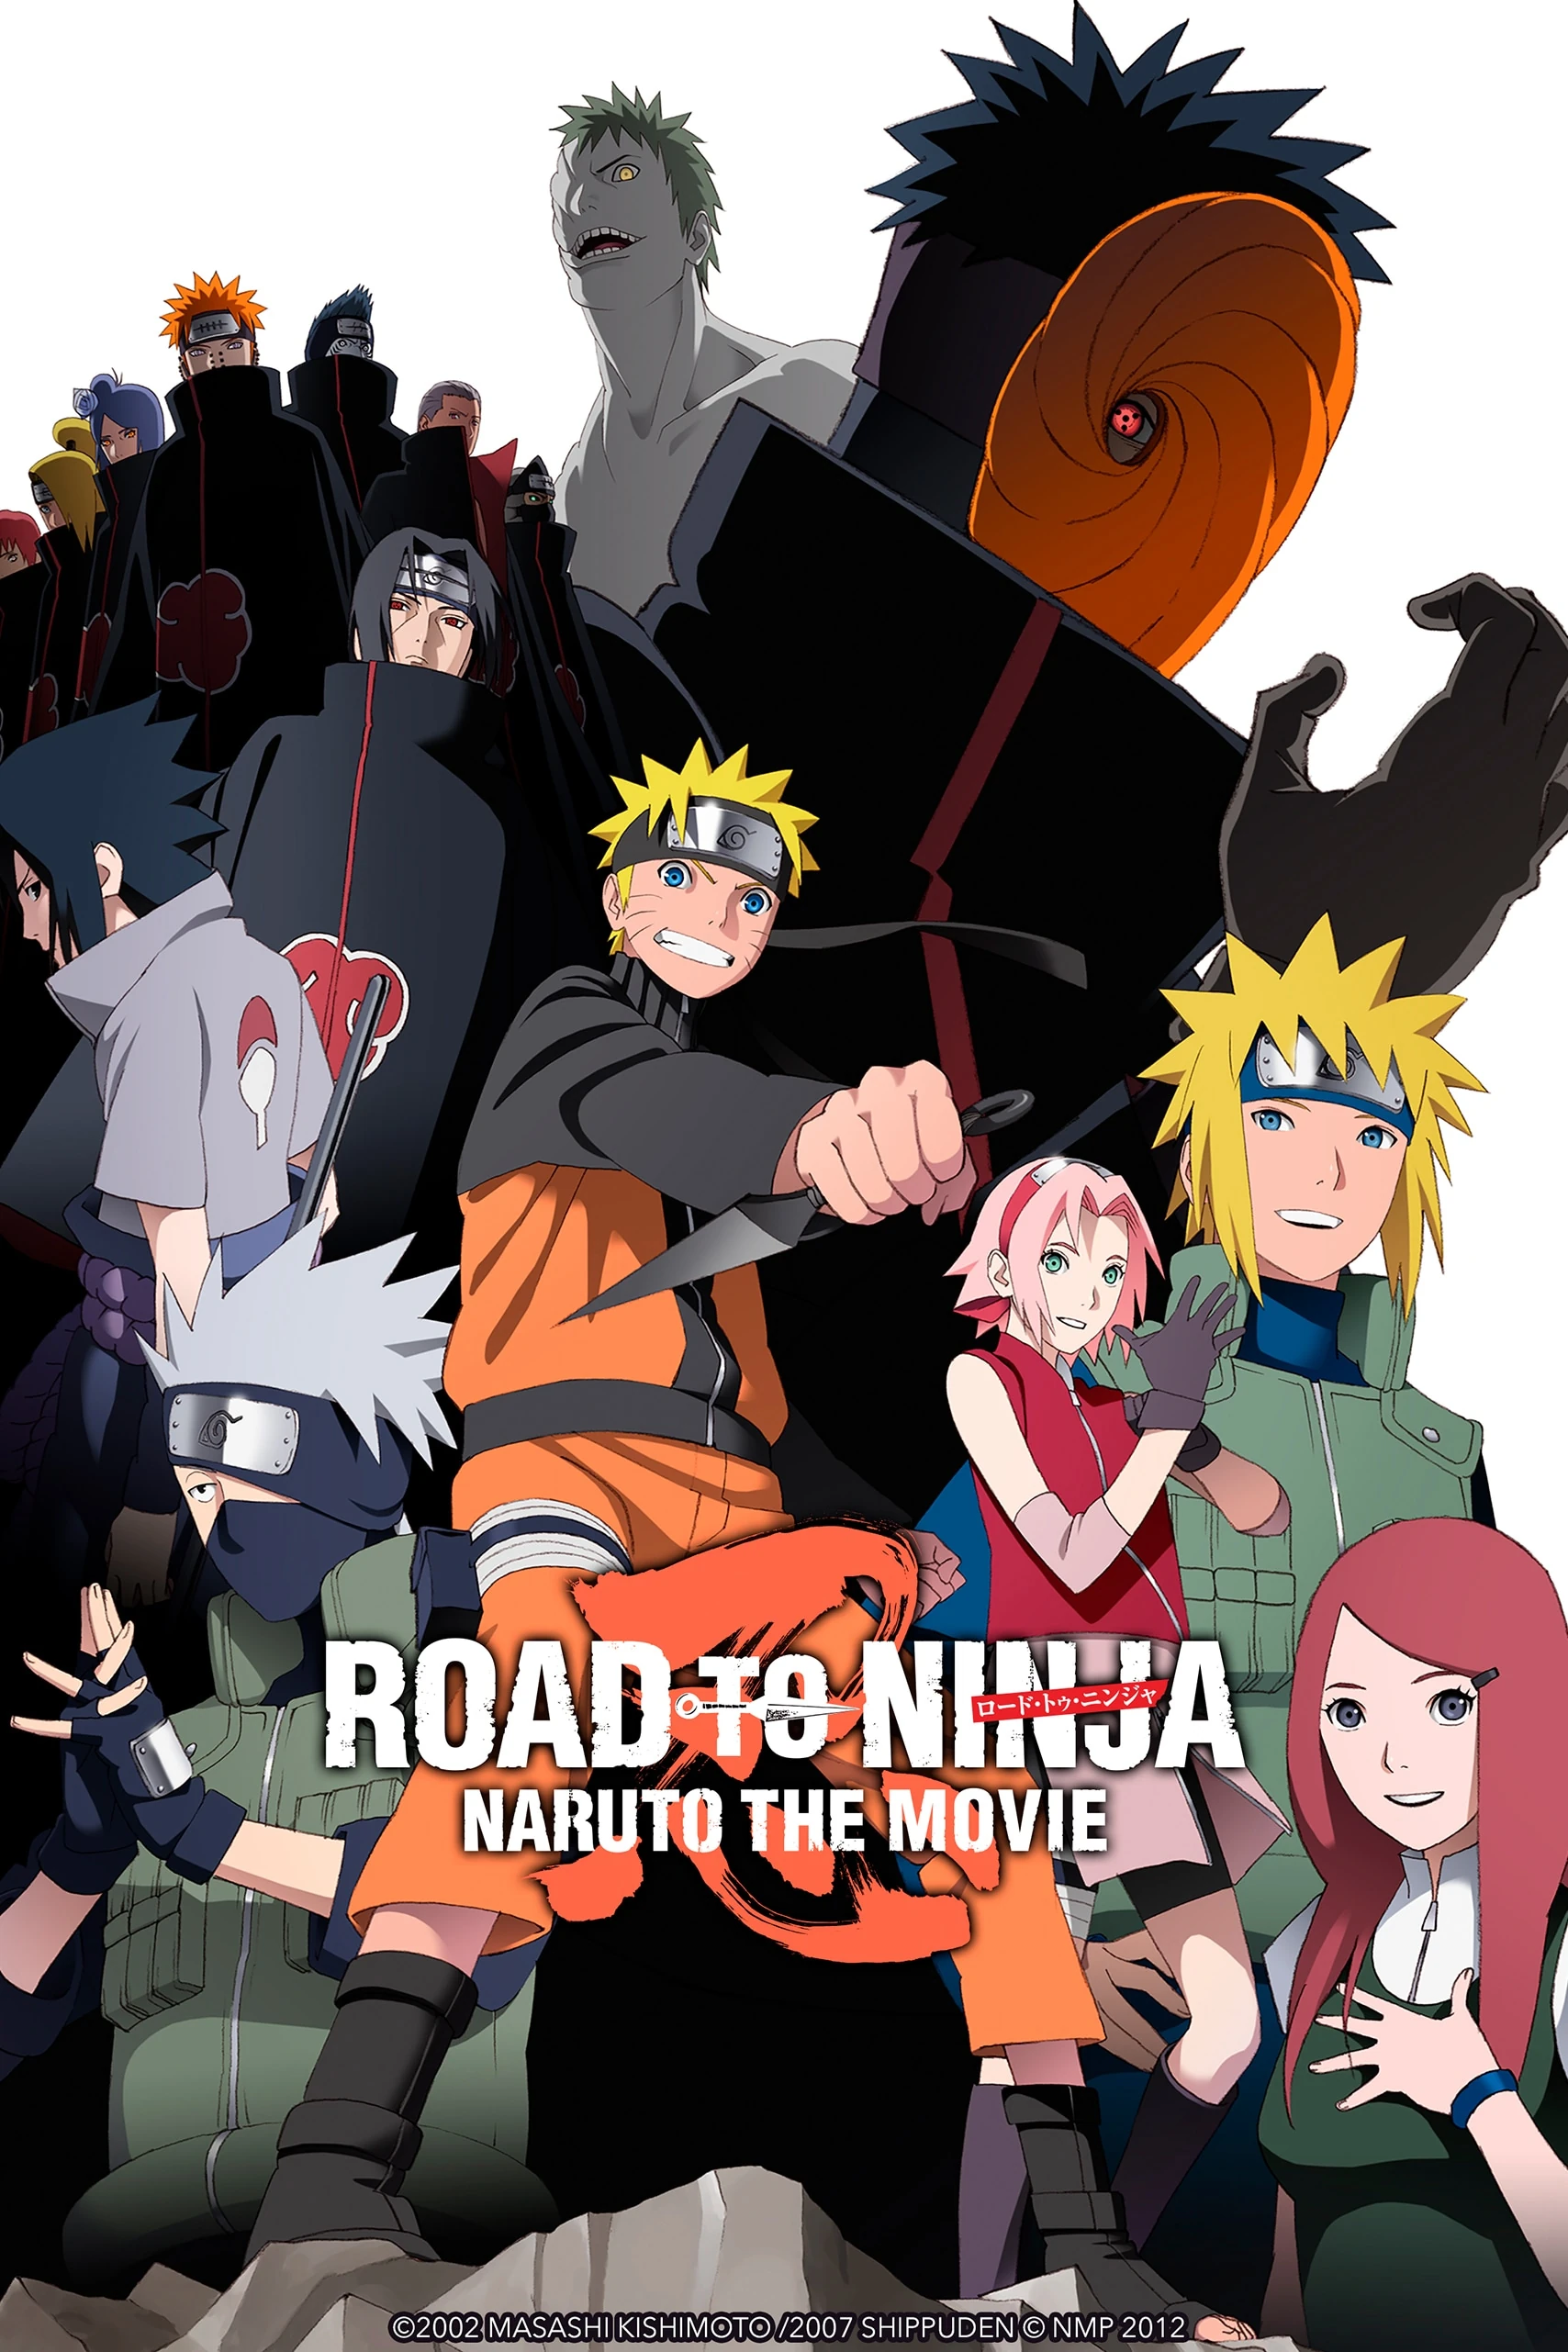 Hinata Hyuga (The Last: Naruto the Movie) (c) Studio Pierrot & Viz Media